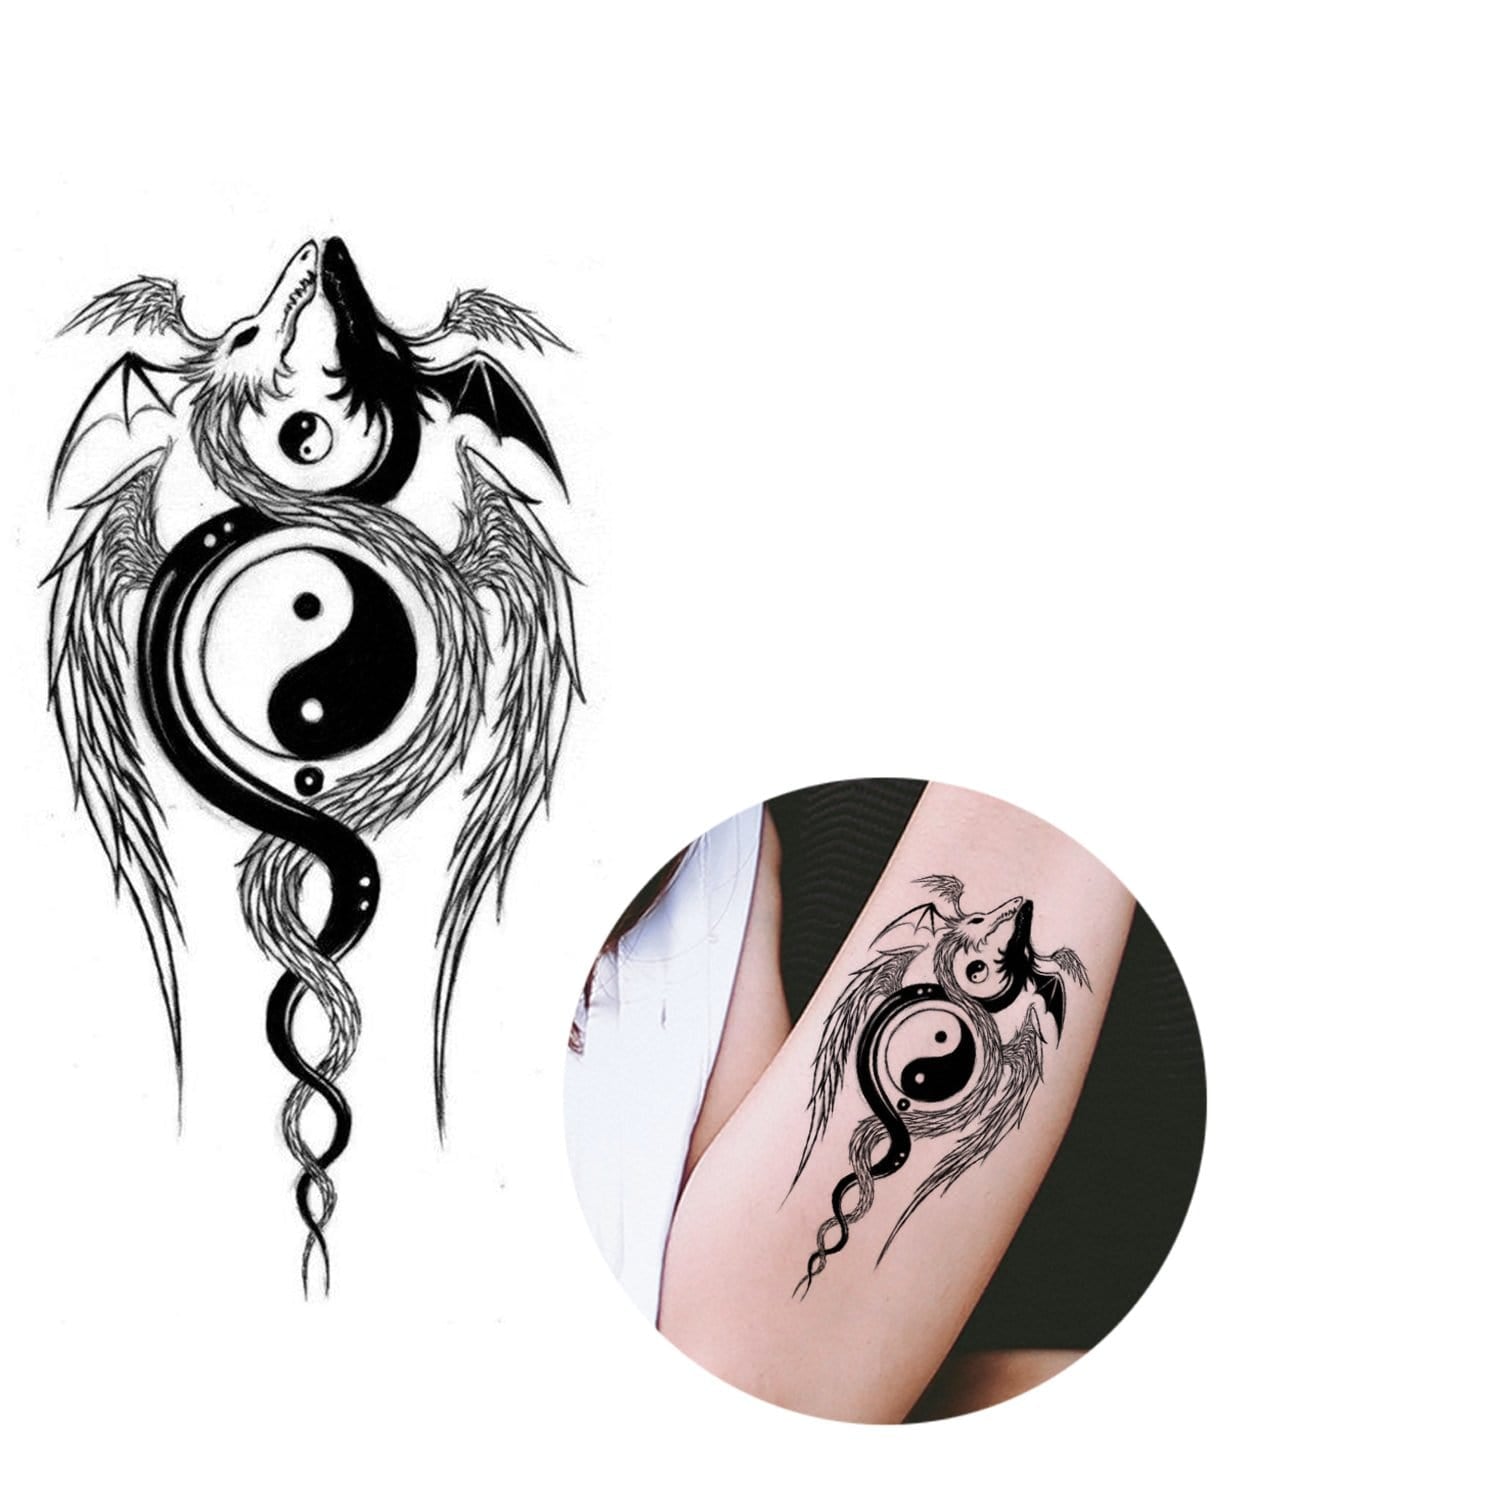 45 Best Dragon Tattoo Design Ideas For Men And Women 2021 | YourTango